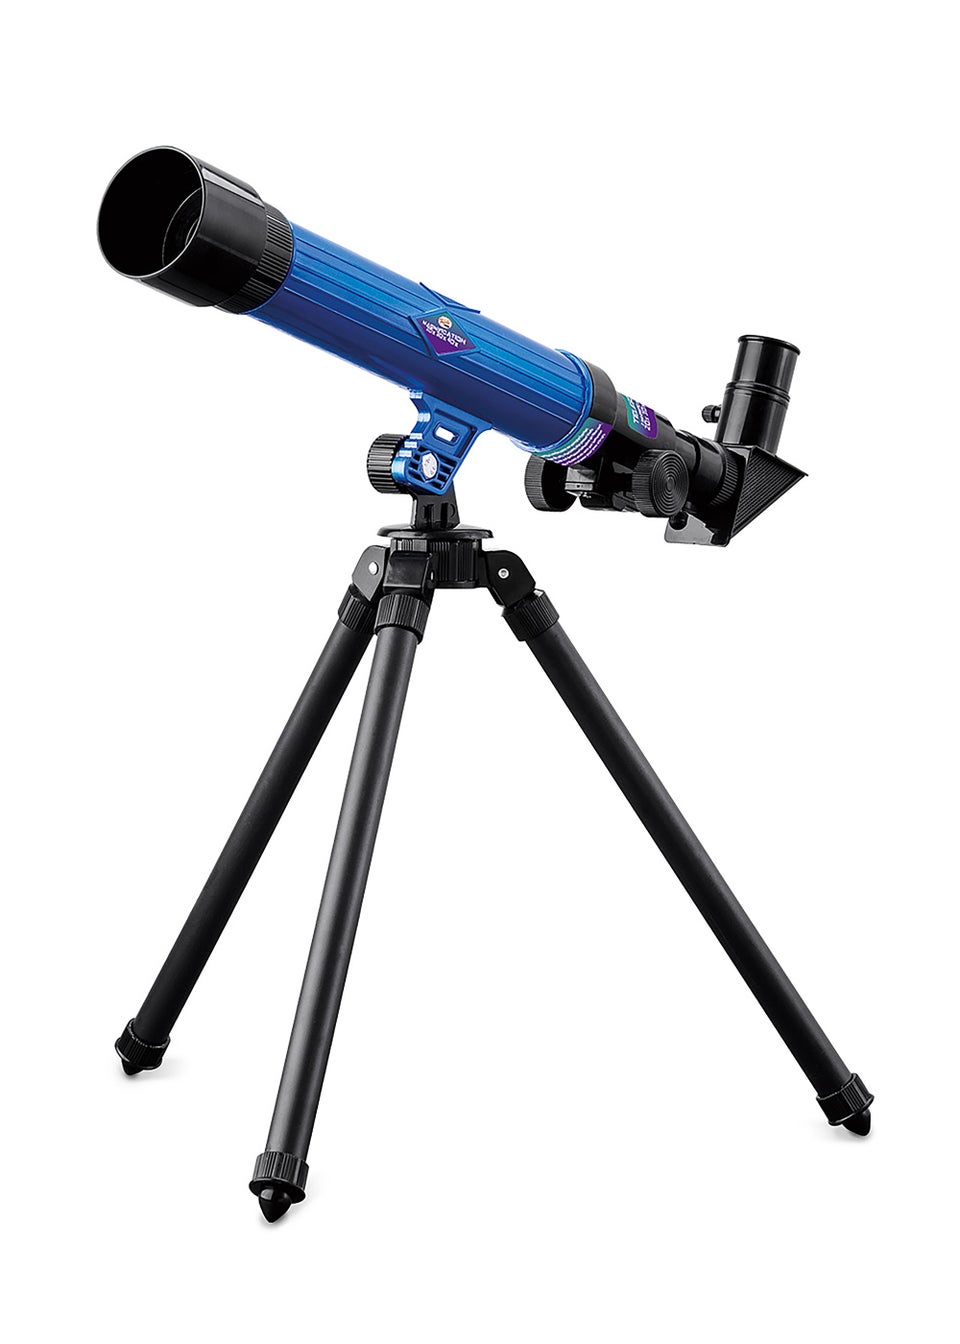 Toyrific Telescope with Tripod